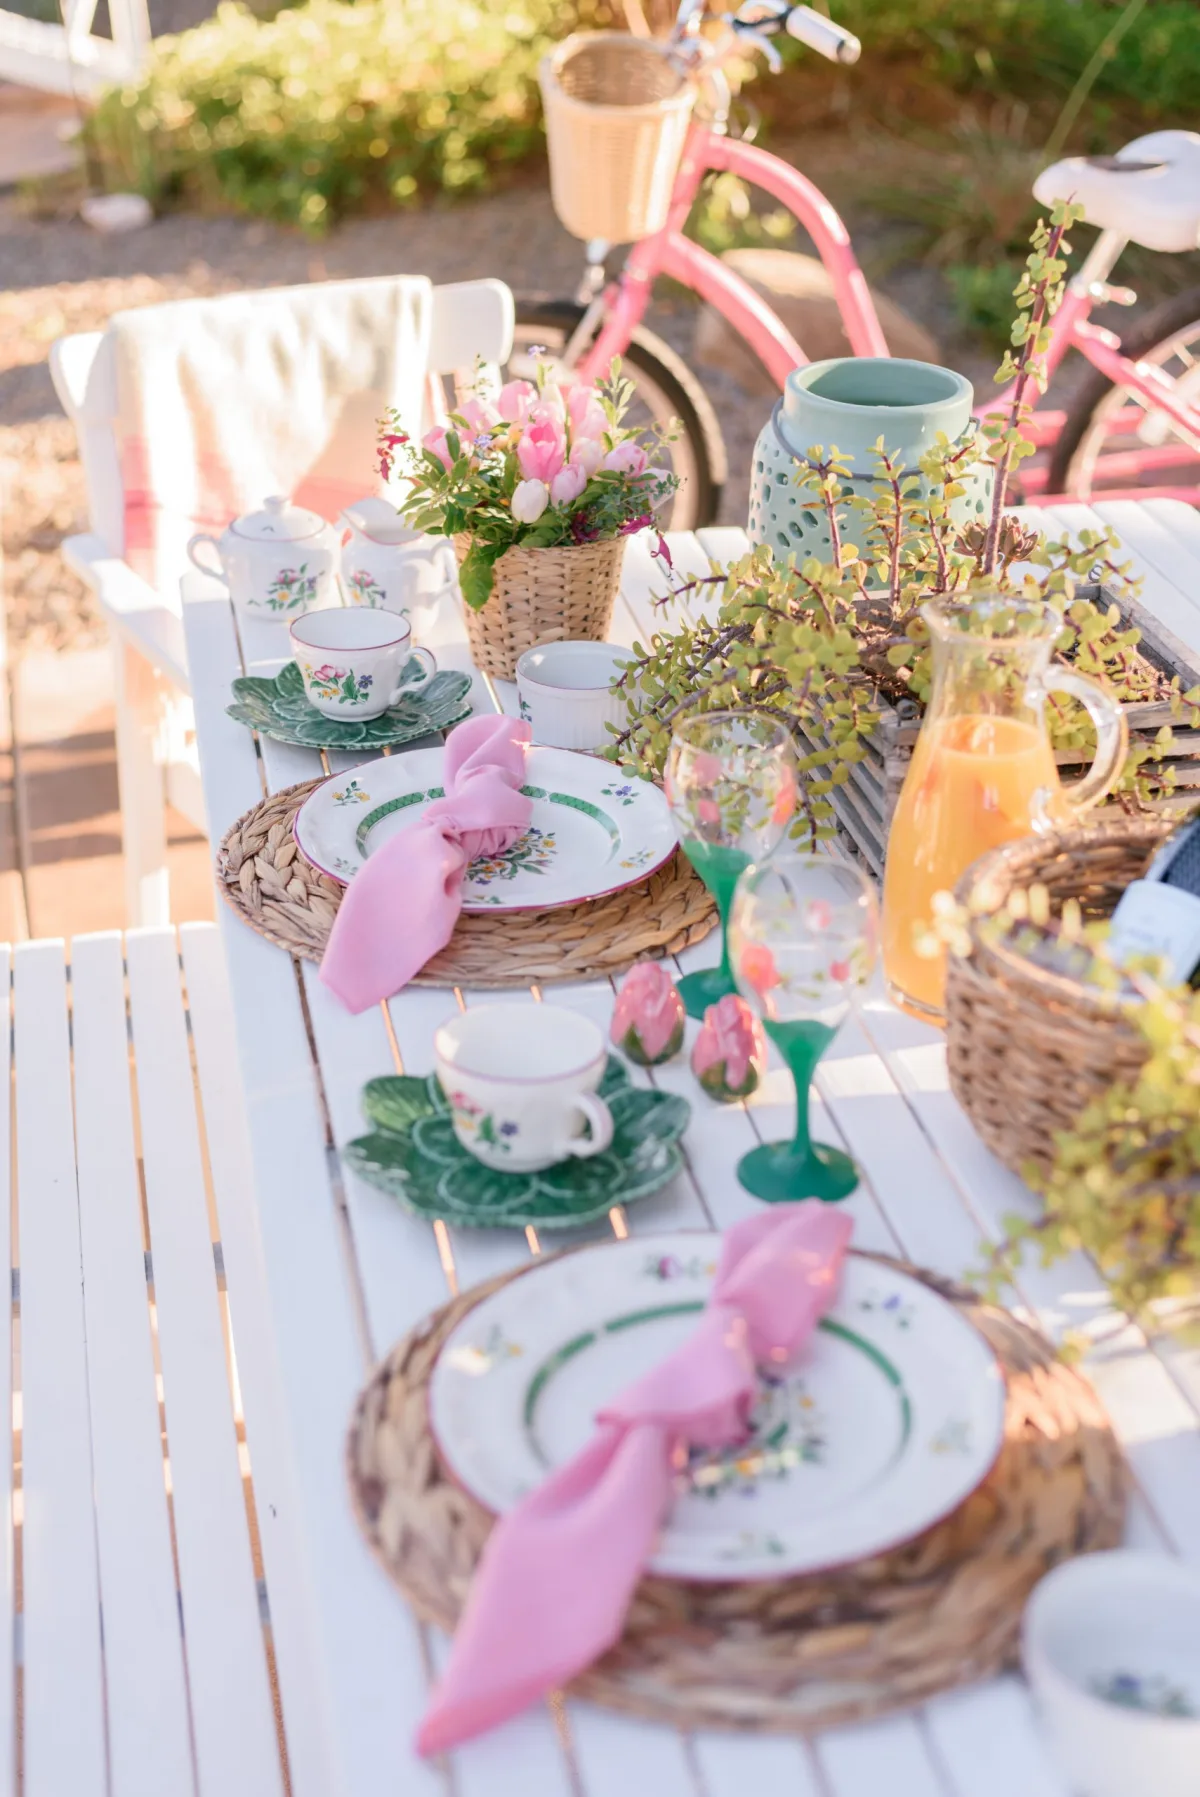 Decoración Pure Easter Country Style Colorful Floral Table Runner Pink Servilletas Country Vajilla